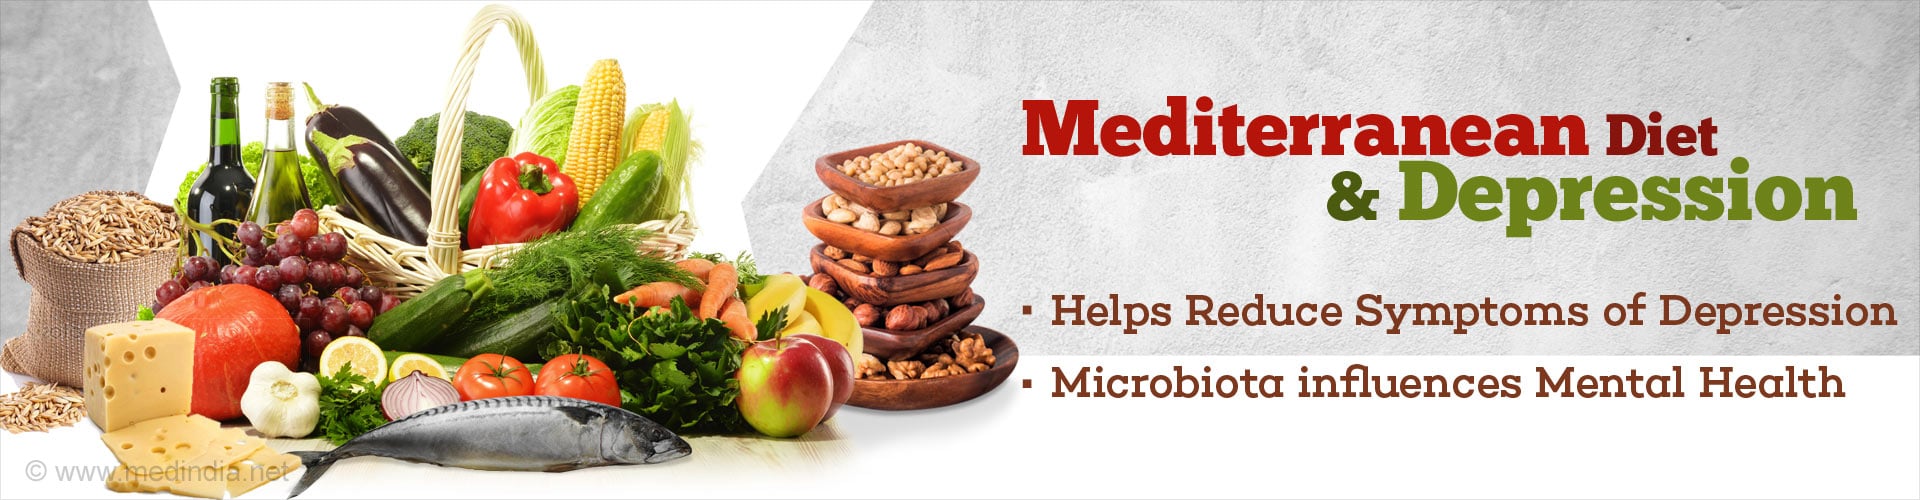 Mediterranean Diet and Depression
- Helps Reduce Symptoms
- Microbiota Influences Mental Health